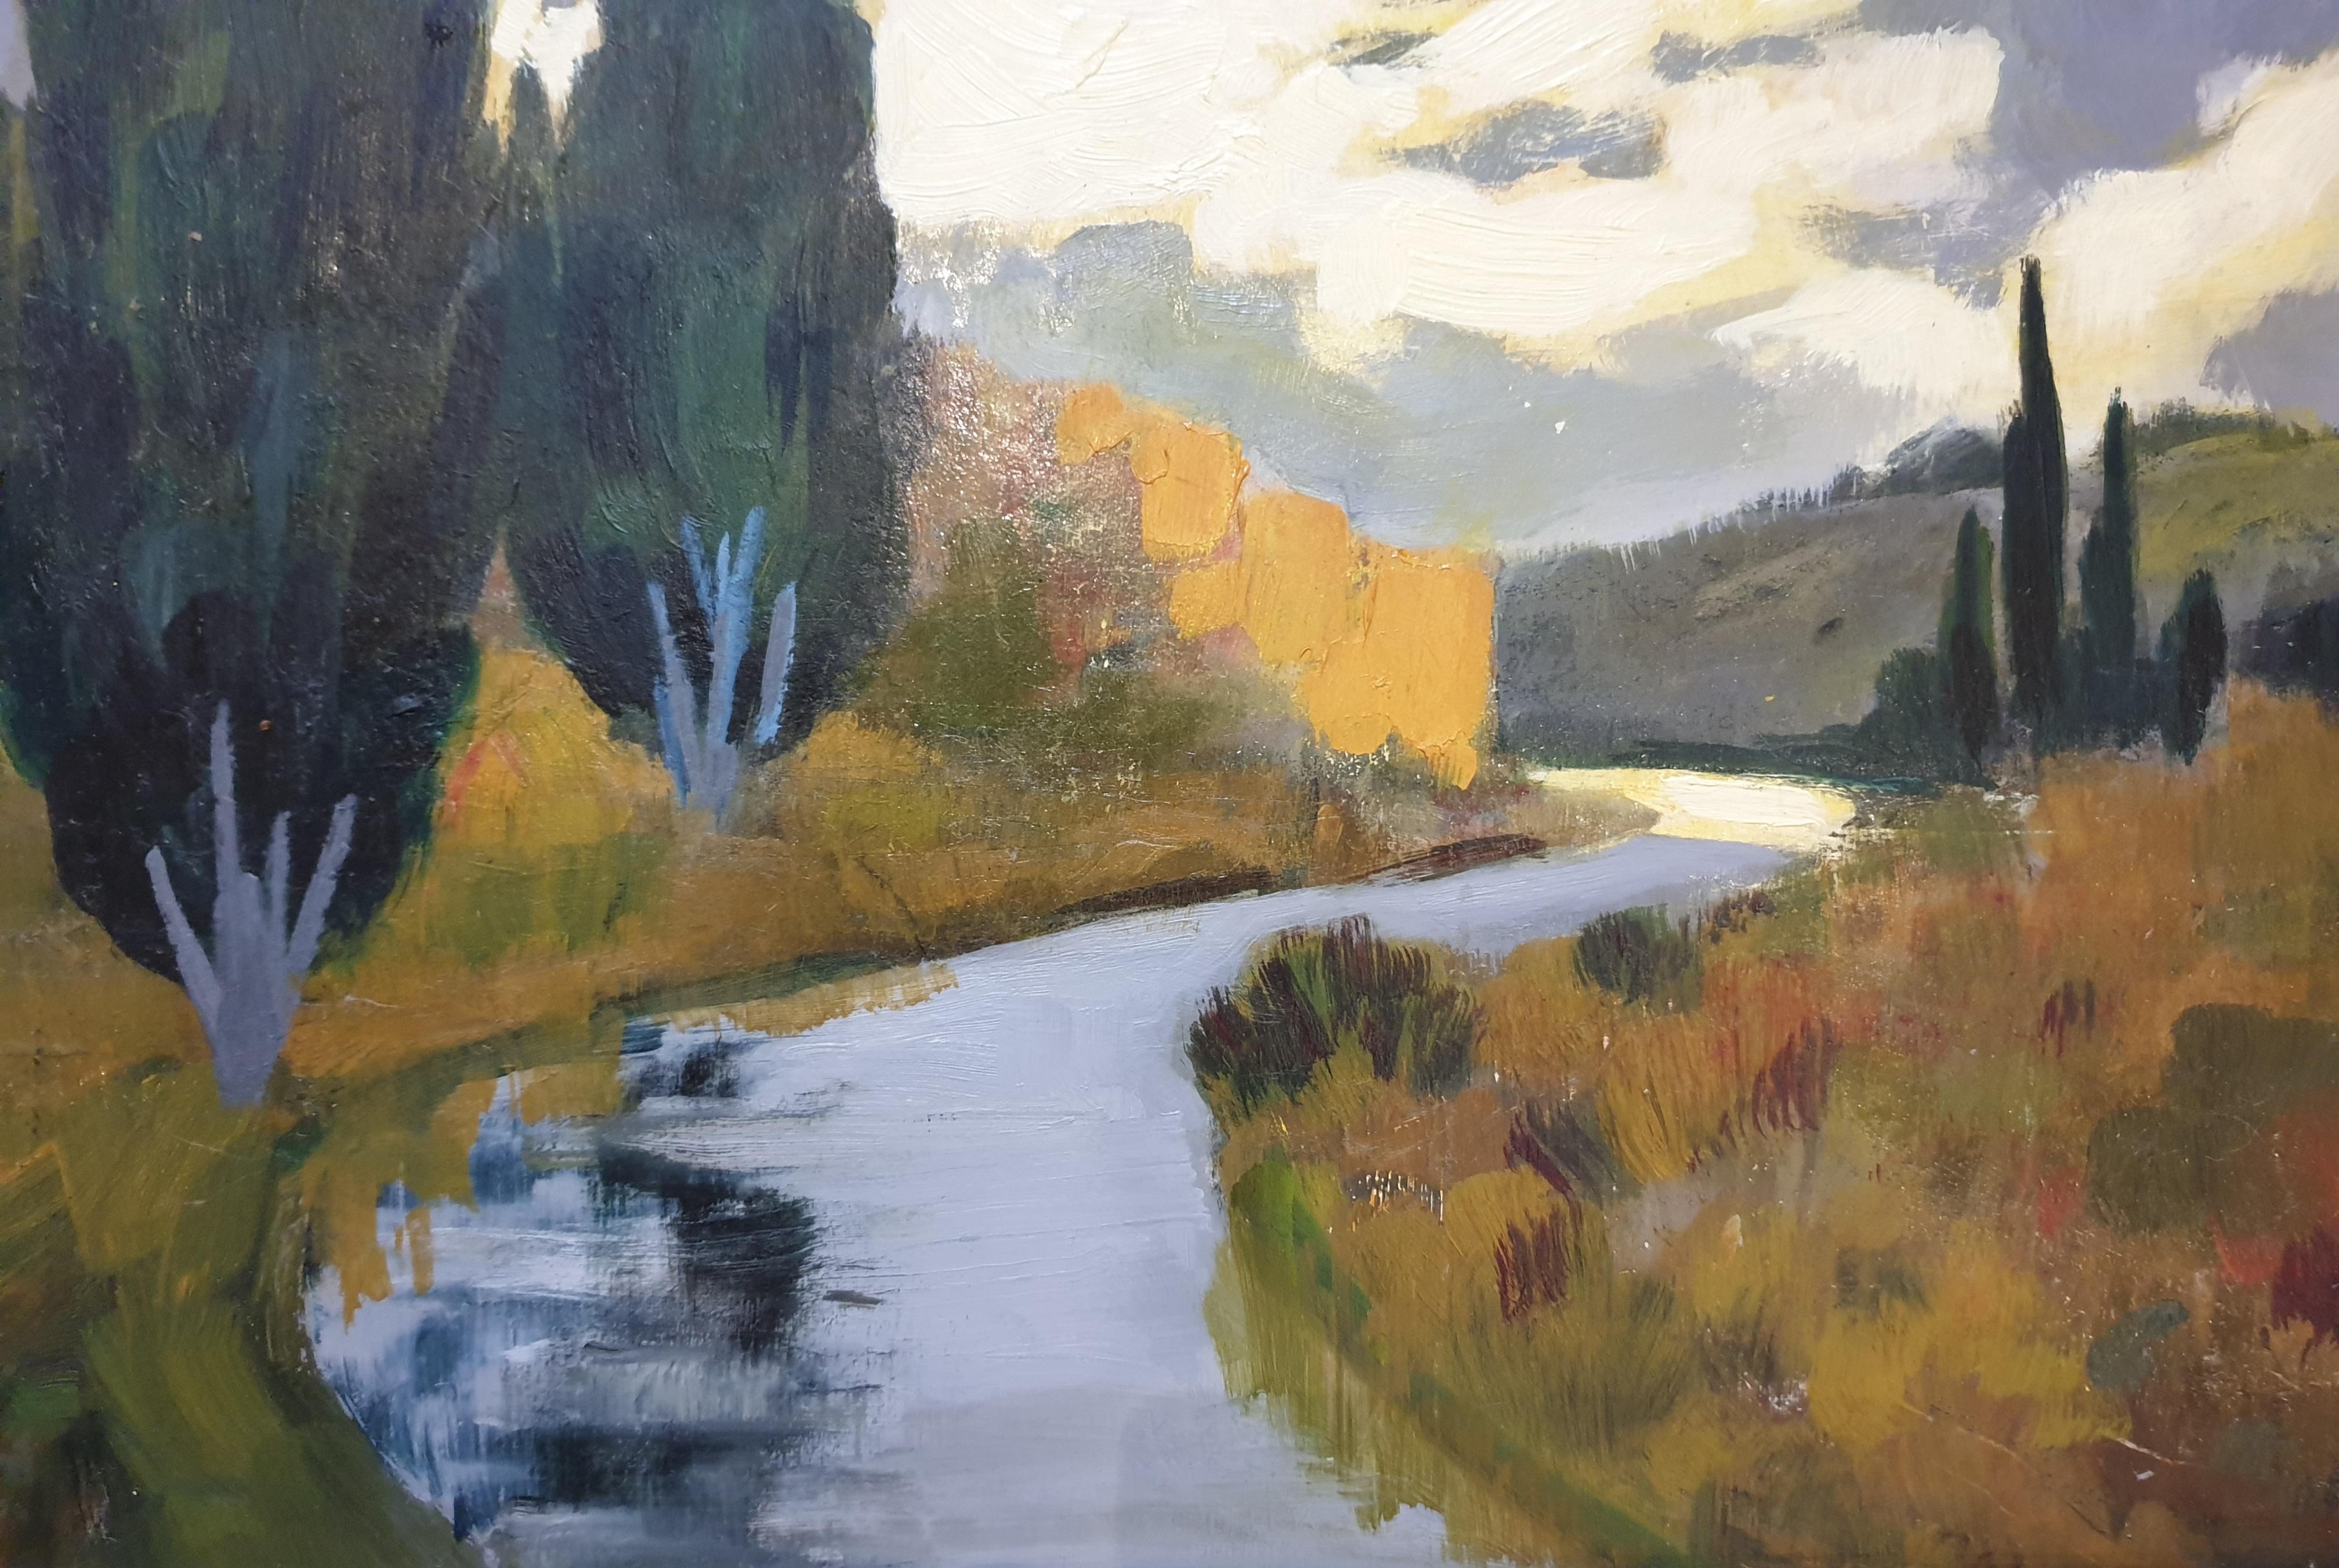 La Routo Bagnado, la rivière Meandering. - Painting de Jean Pellegrin 